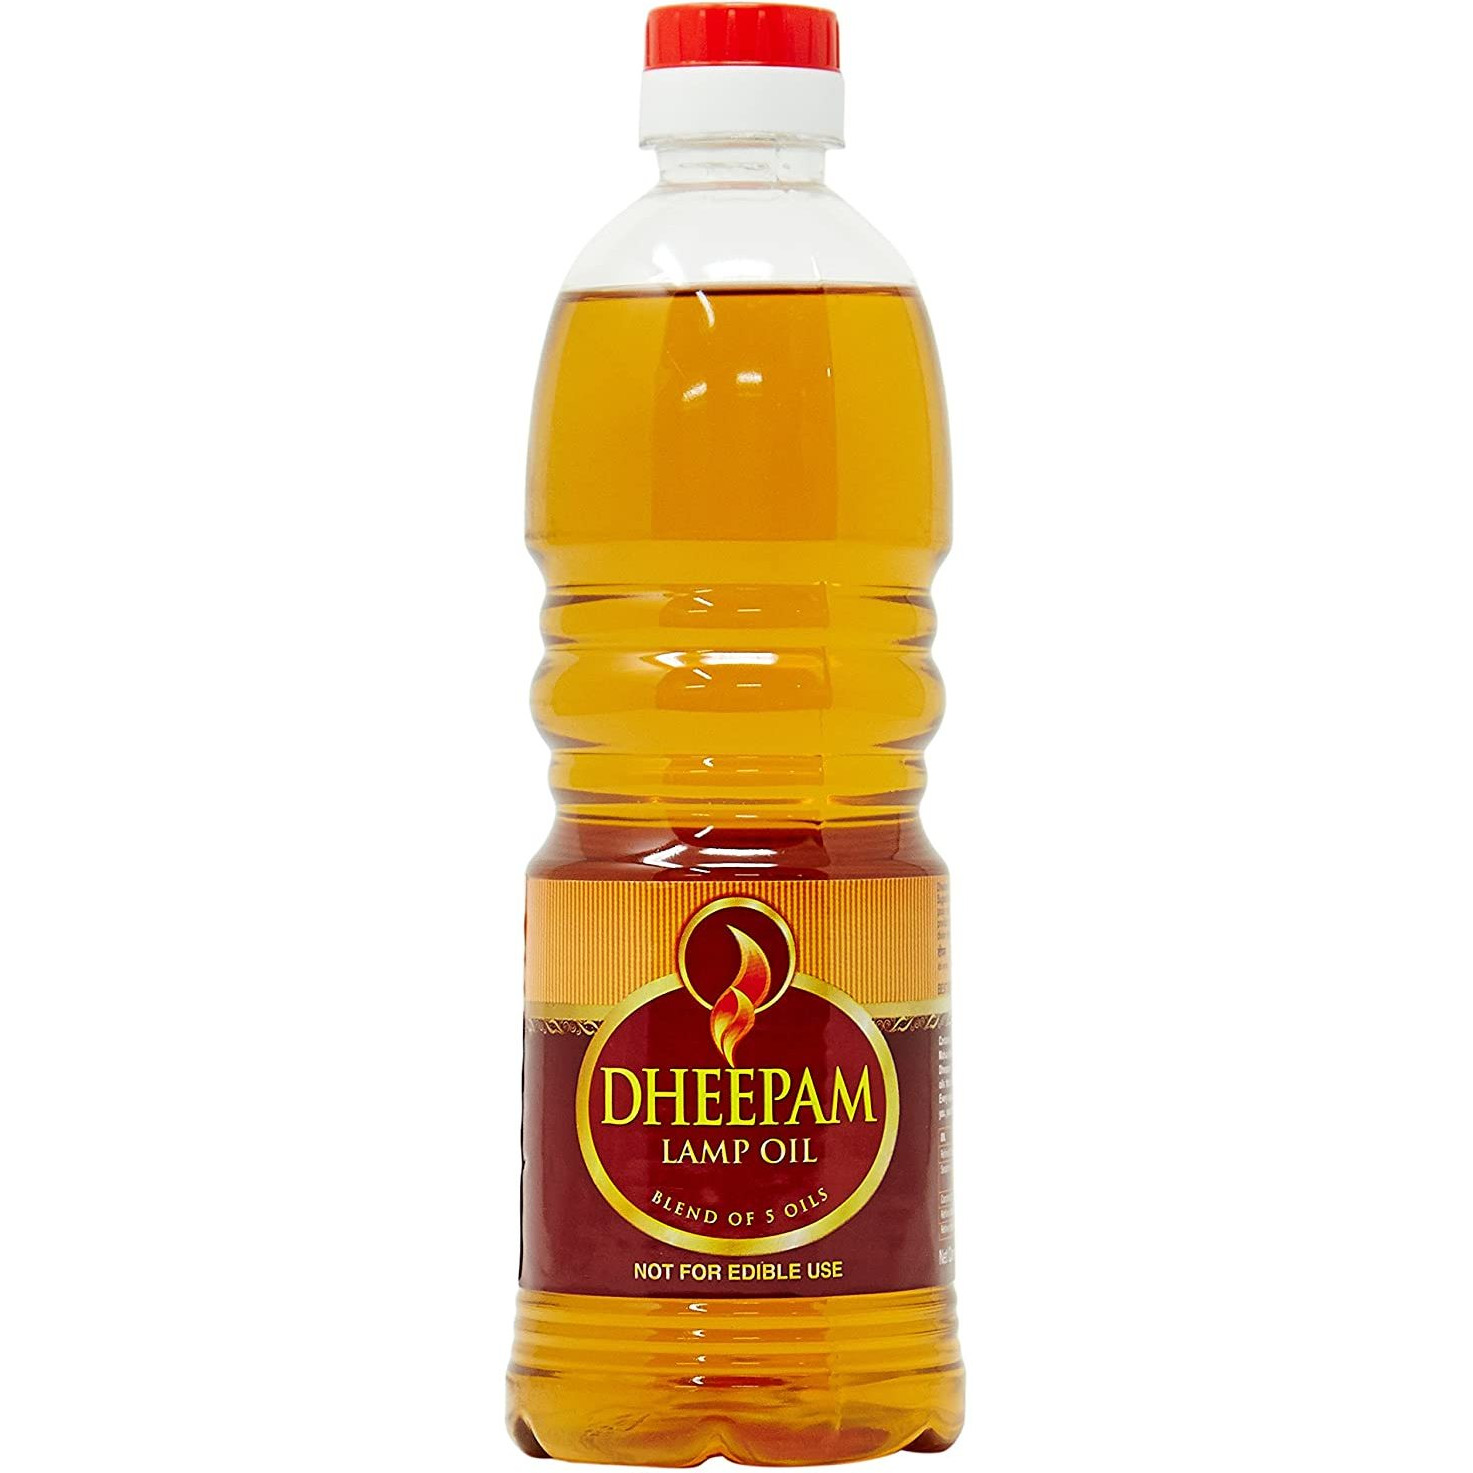 Dheepam Lamp Oil Blend of 5 Oil - 500 Ml (456.5 Gm)